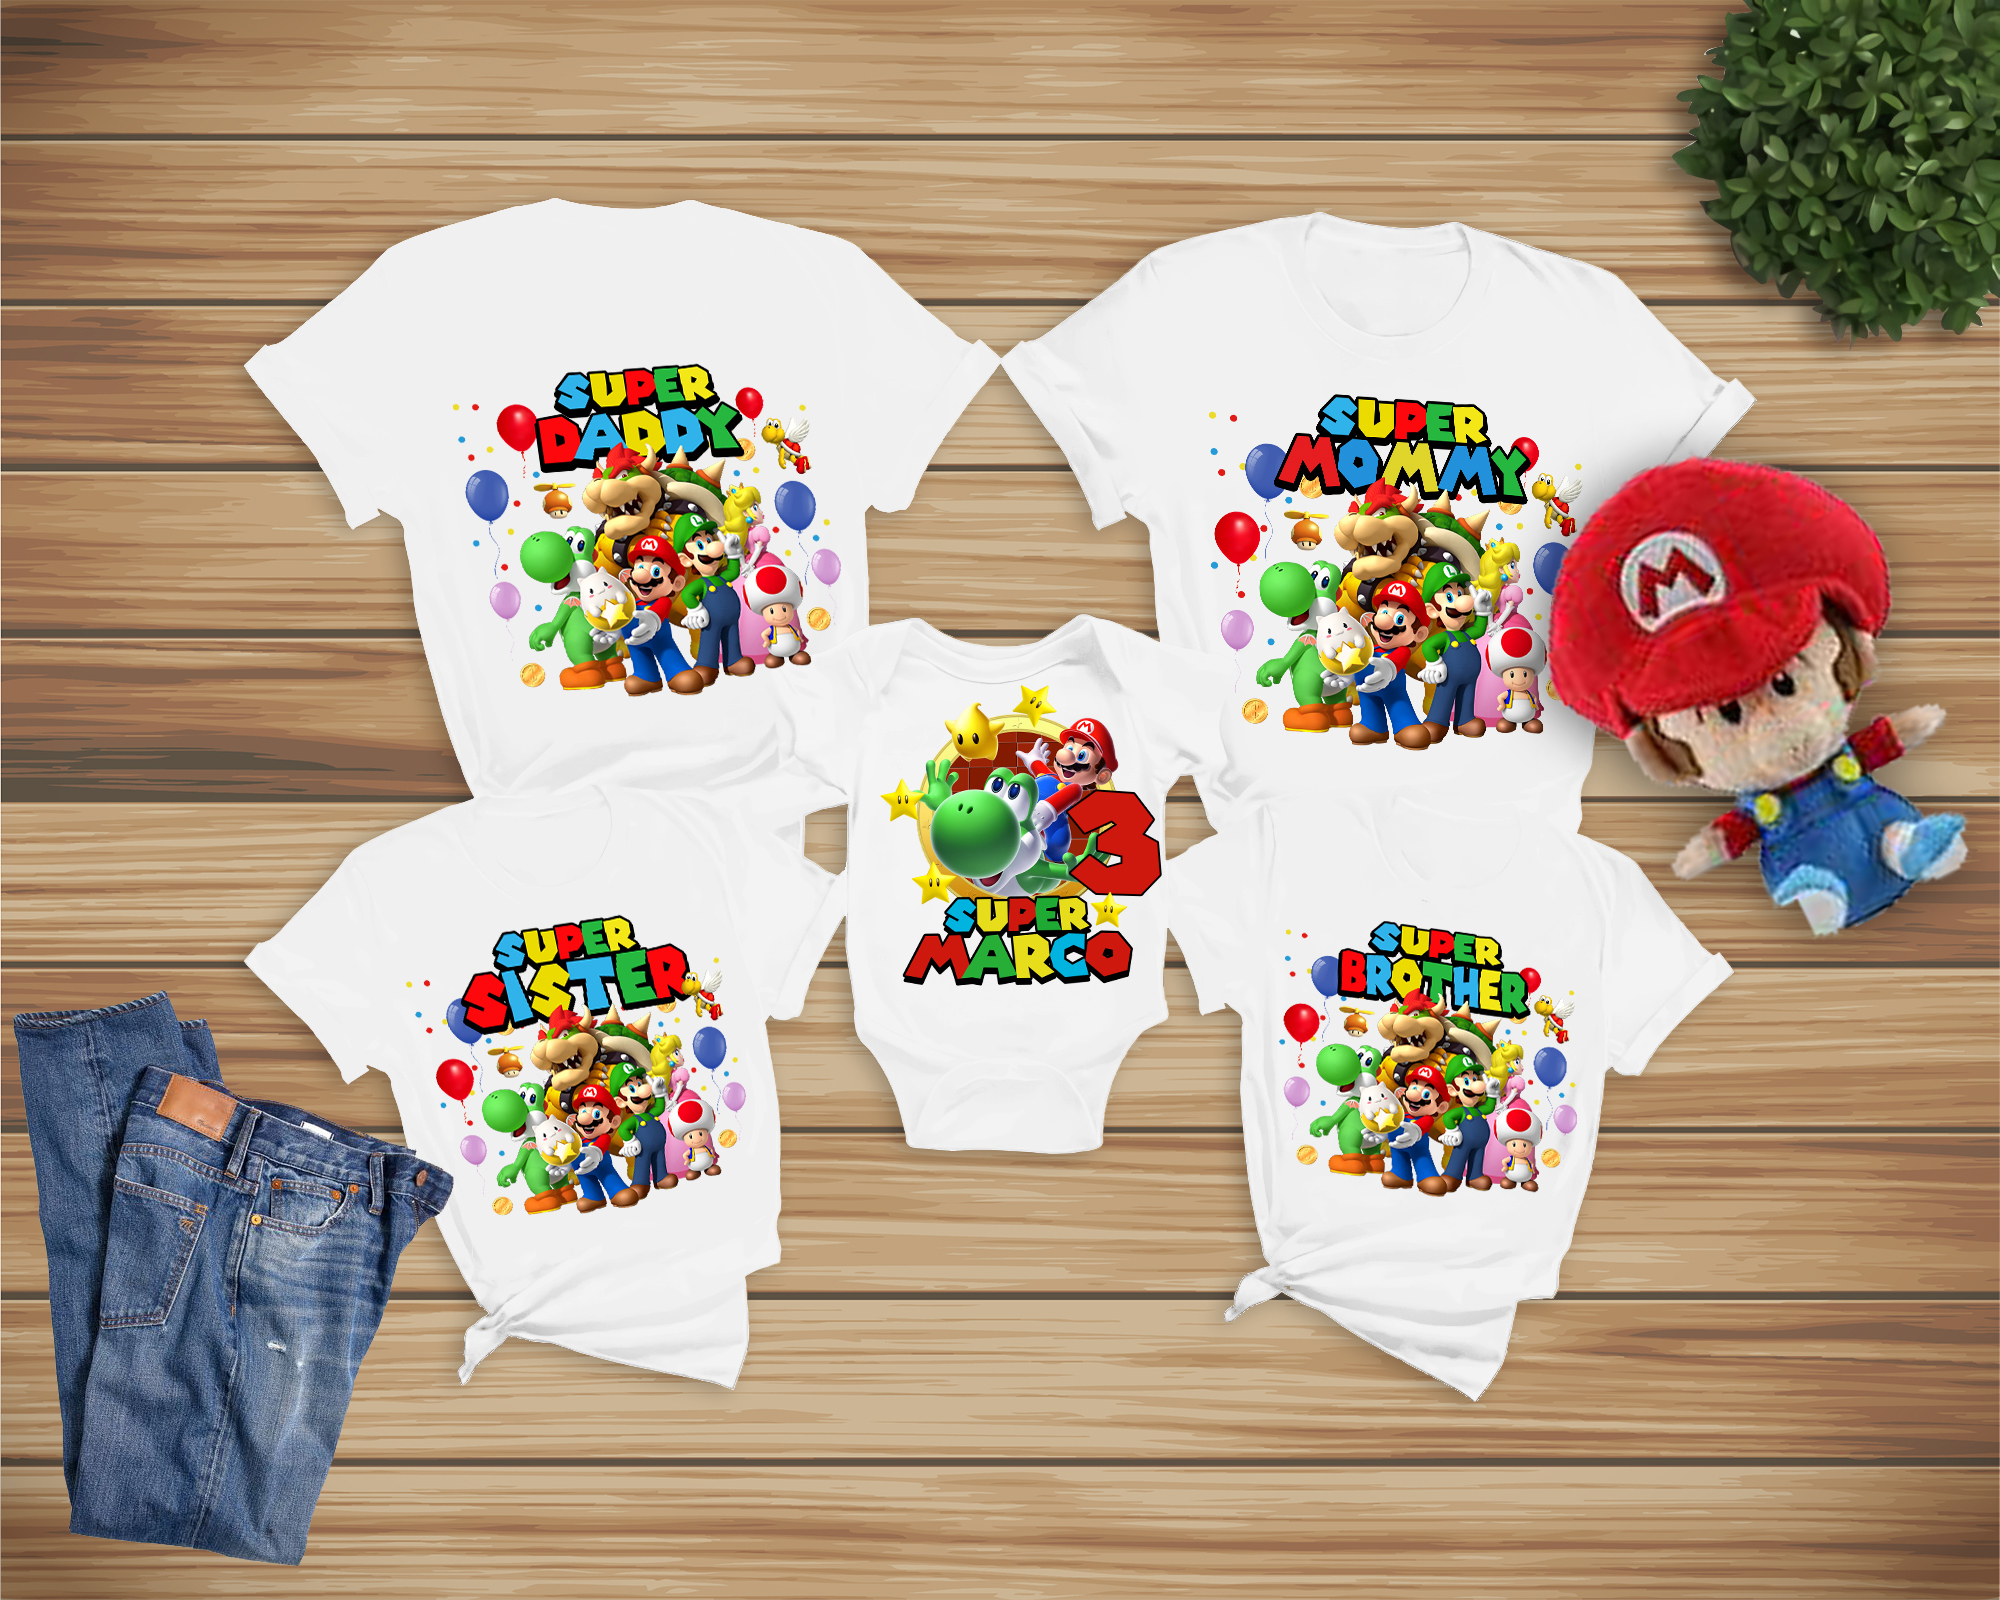 Custom Super Daddio Shirt , Super mario shirt, Father's Day Shirt, Super Mommio Shirt, Super Daddio shirt ,Matching family shirts